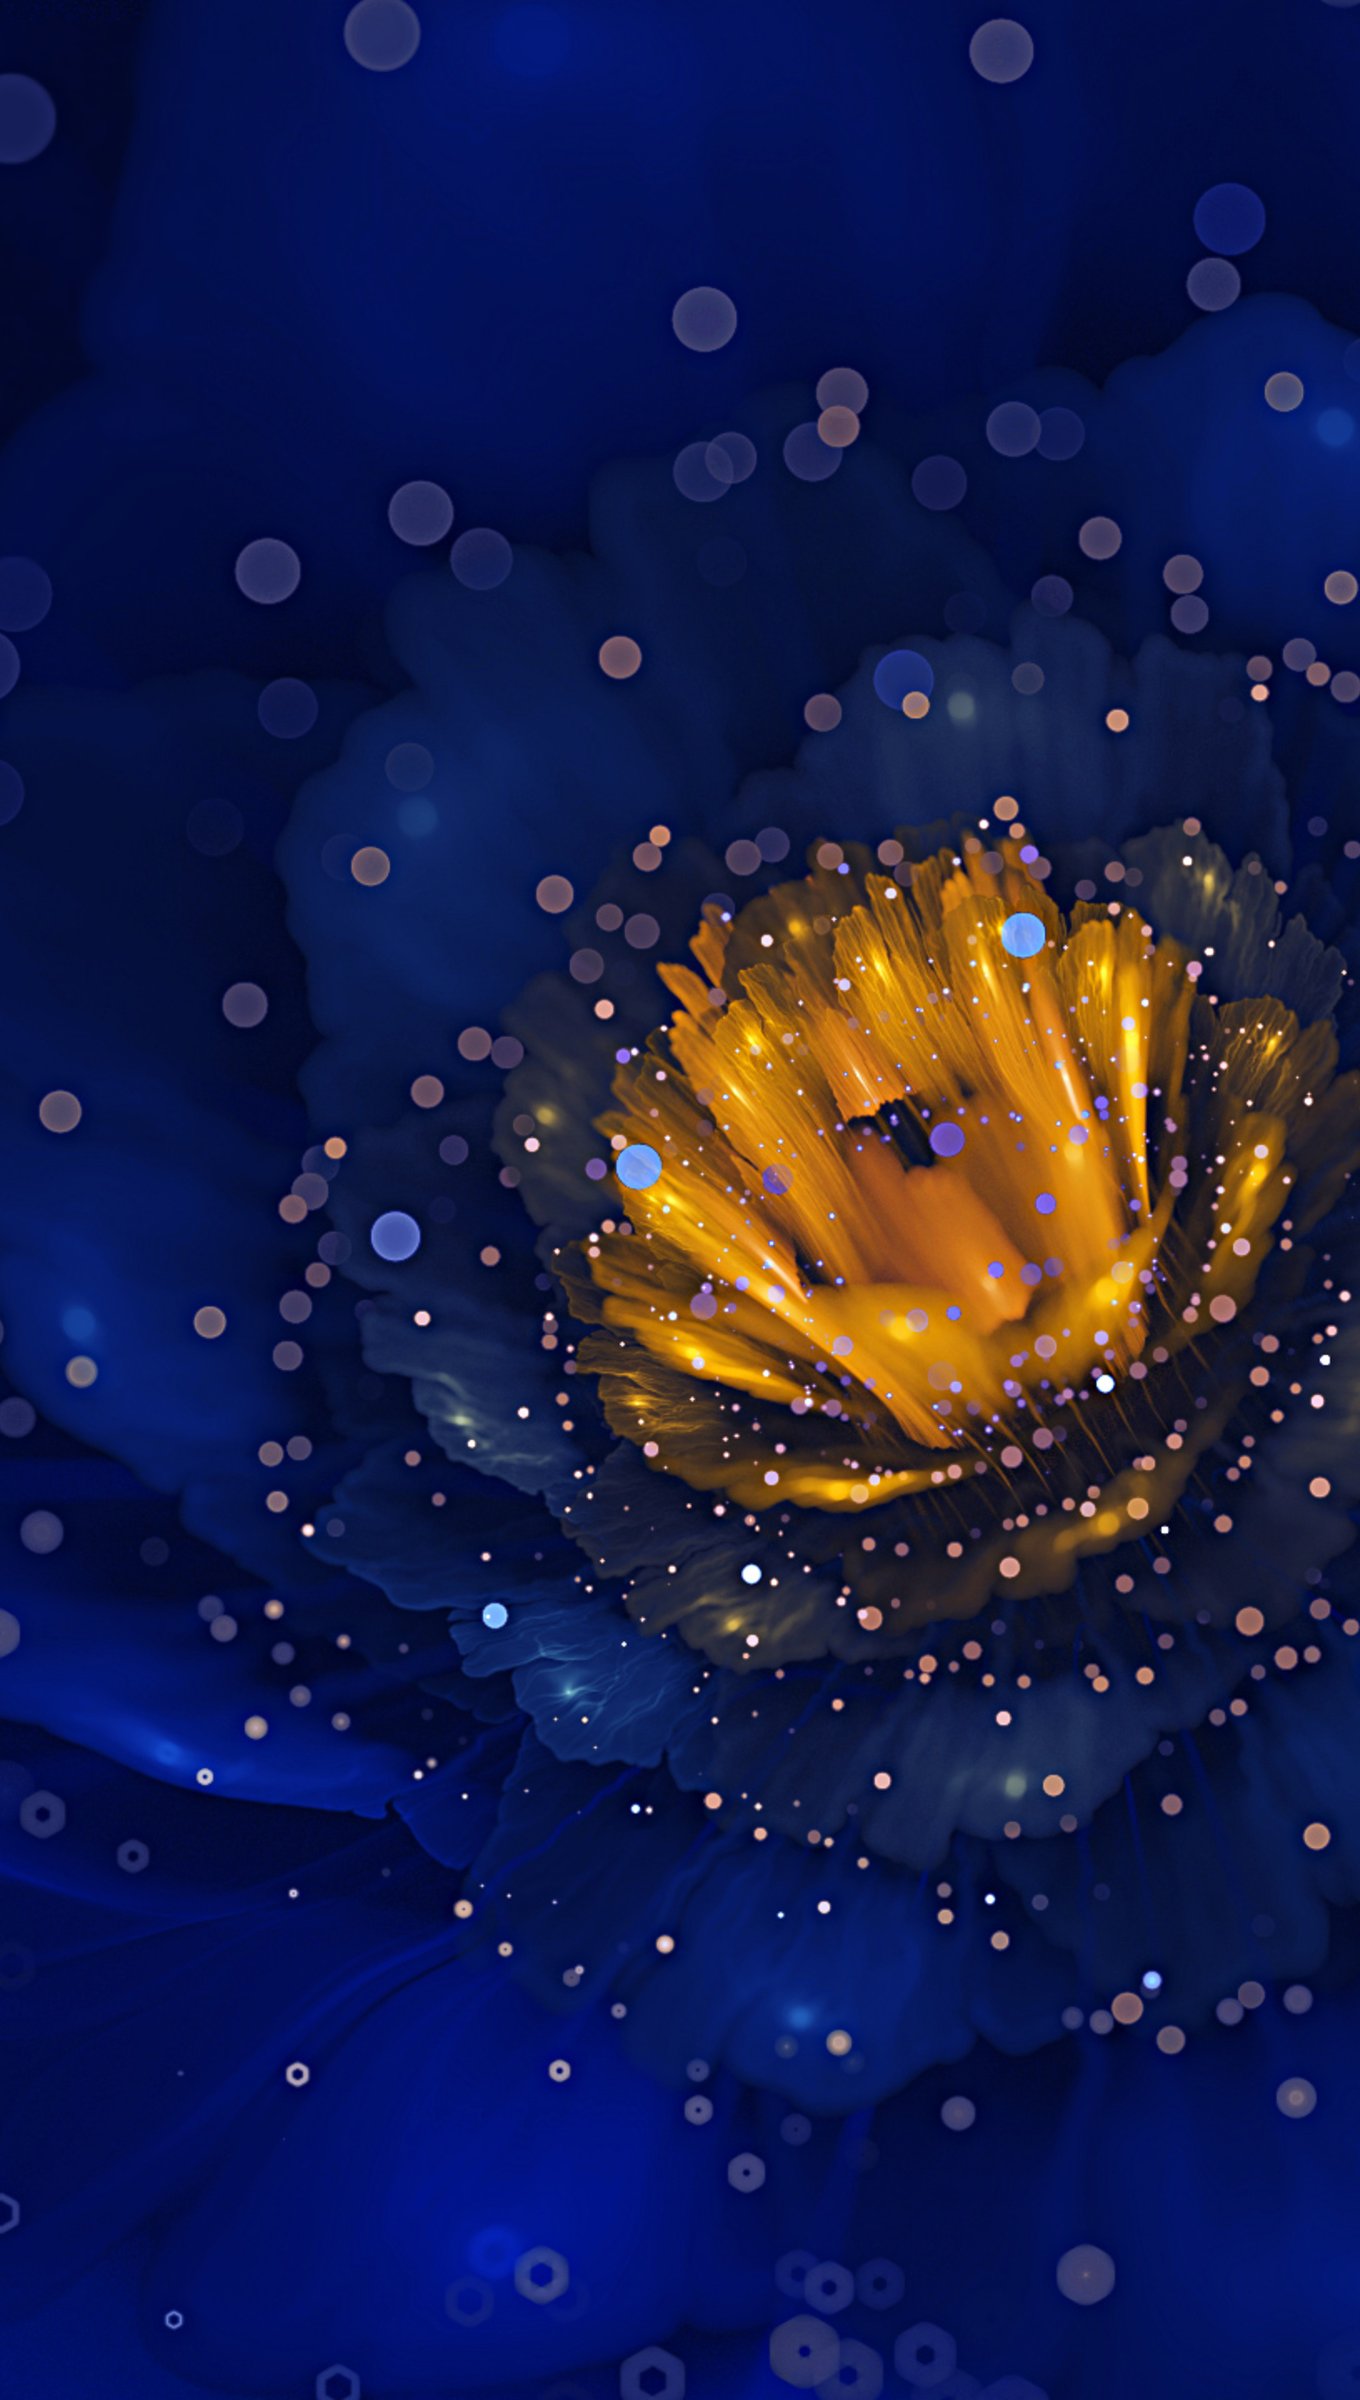 Digital blue flower up close Wallpaper 4k Ultra HD ID:4752